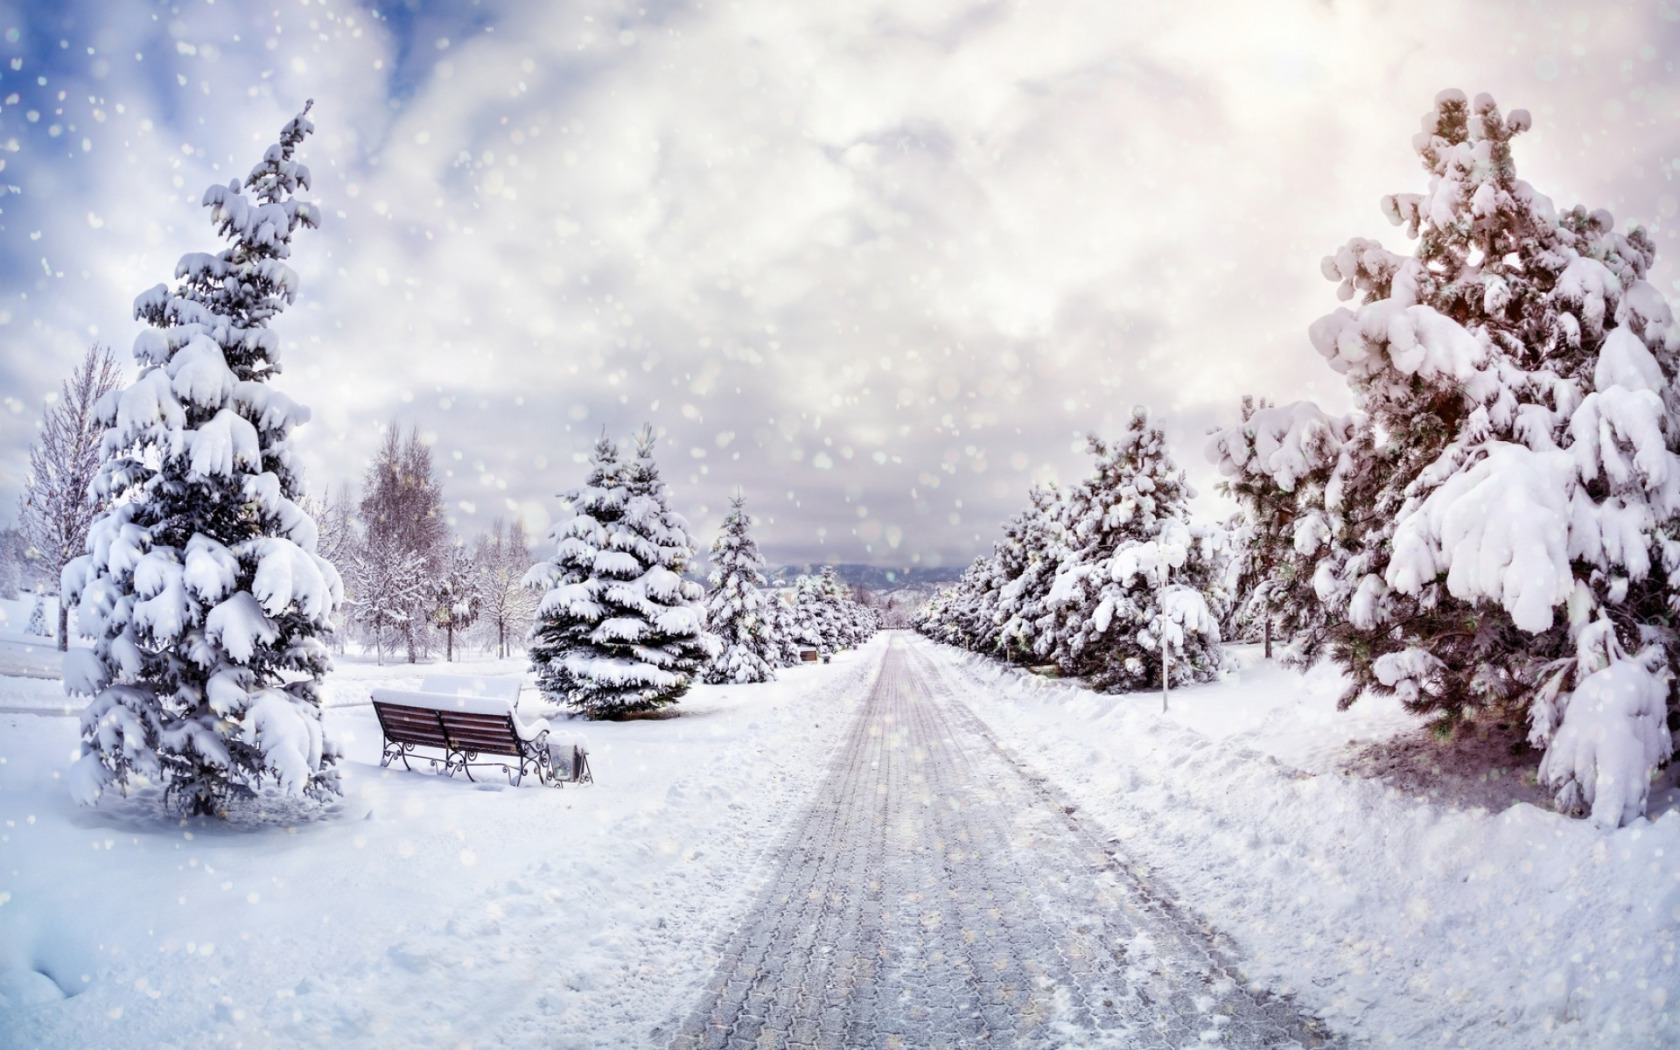 Winter up. Фон зима. Красивый зимний фон. Зимний фон для фотошопа. Зимний пейзаж снегопад.